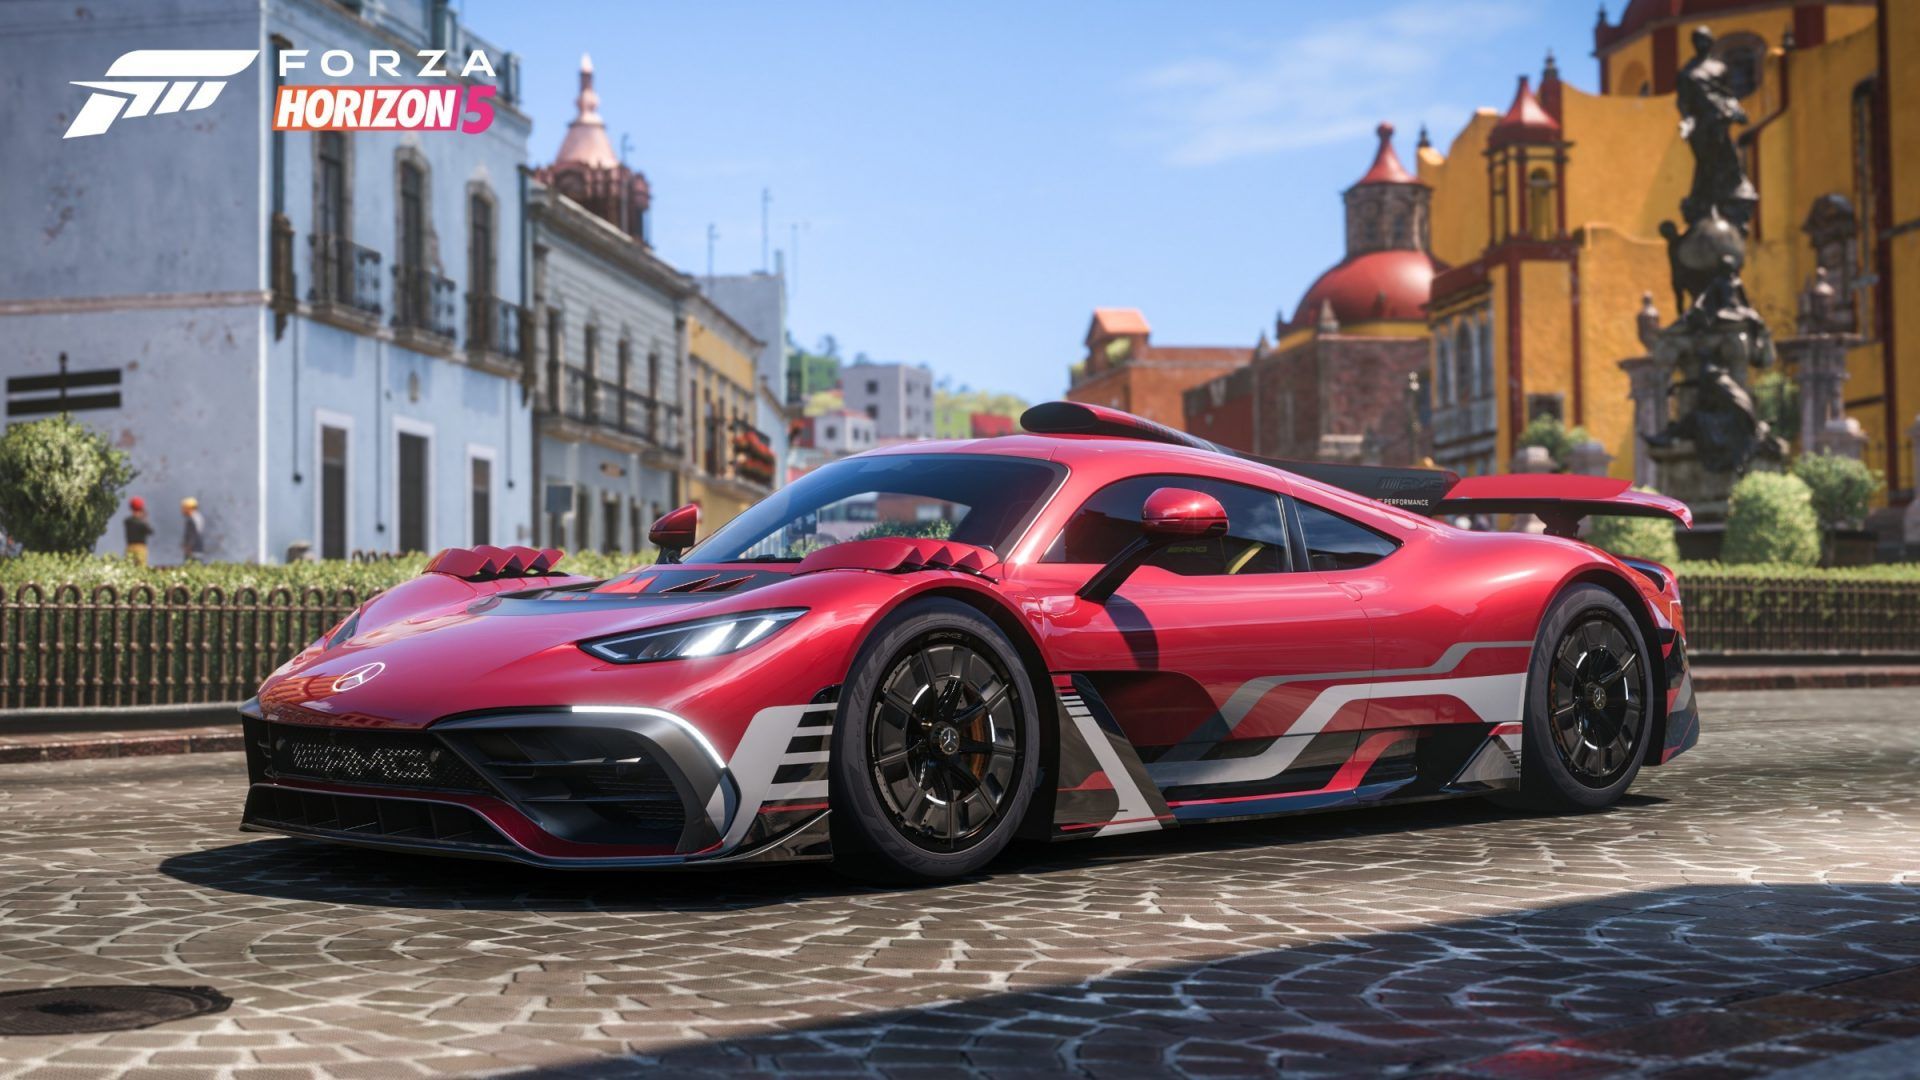 Forza Horizon 5 HD Wallpapers